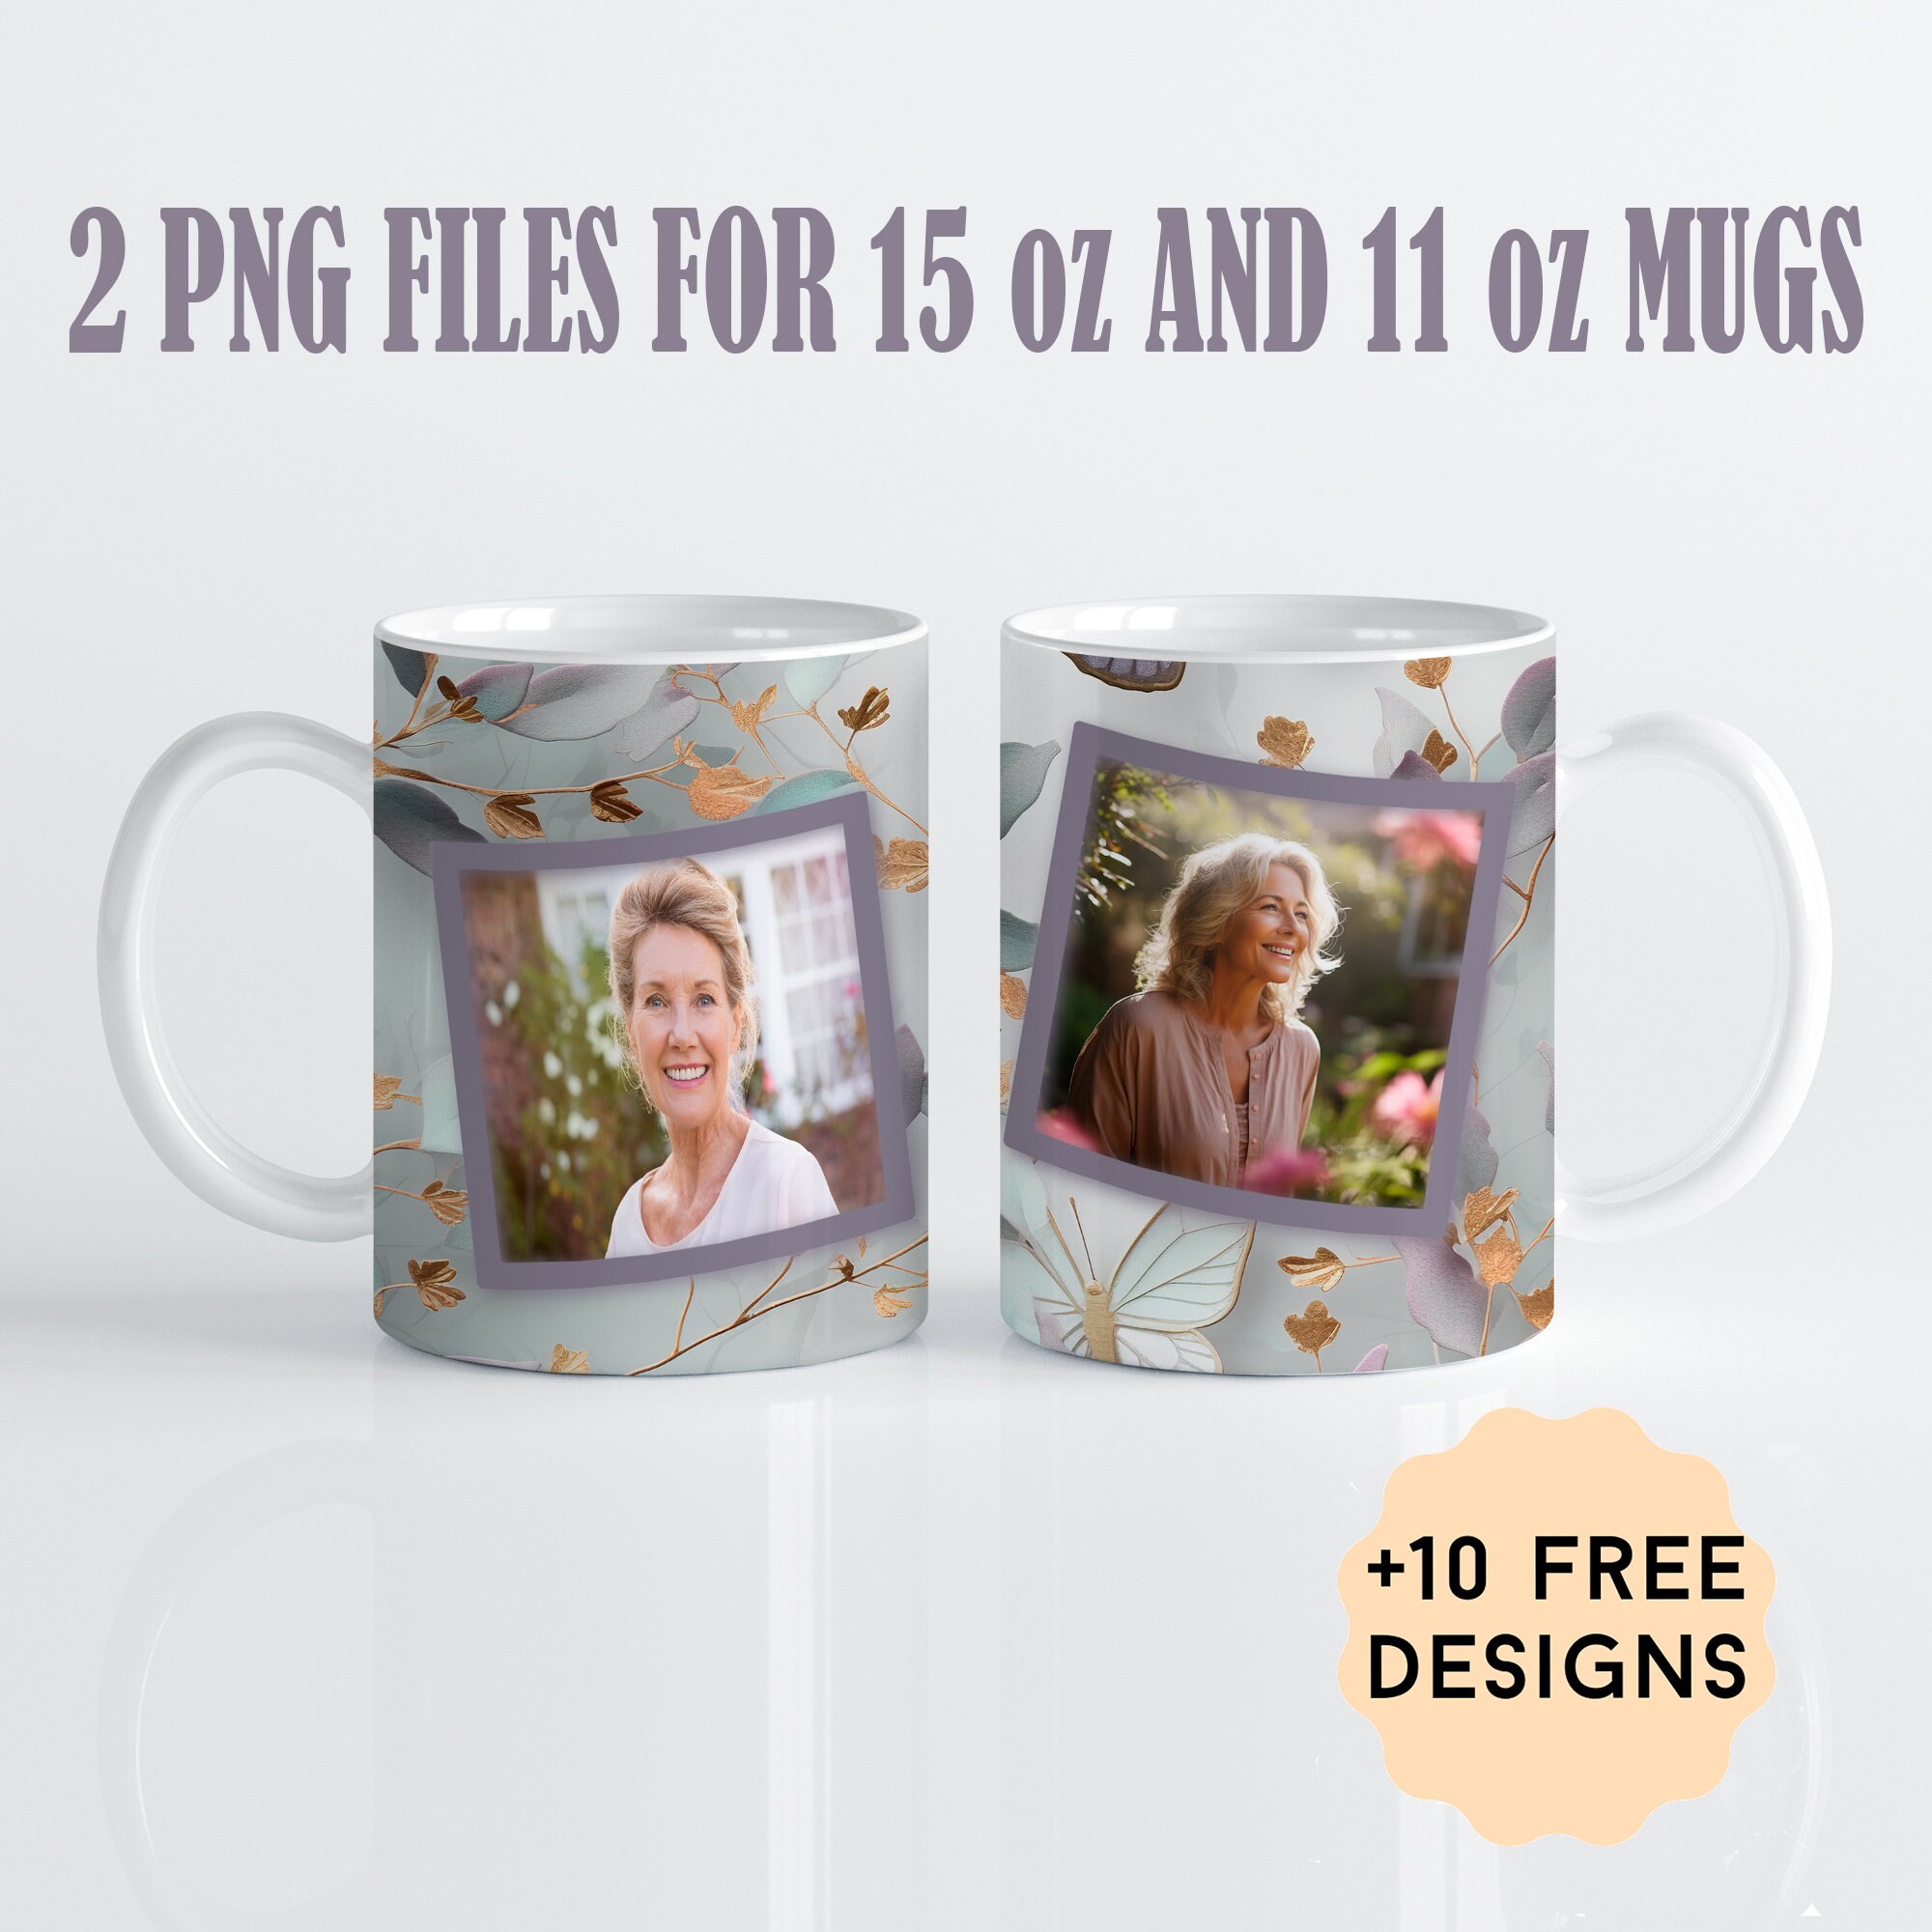 Love photo mug, Photo mug wrap png, Picture mug template for sublimation 11  and 15 oz, Wood mug design template for 1 photo